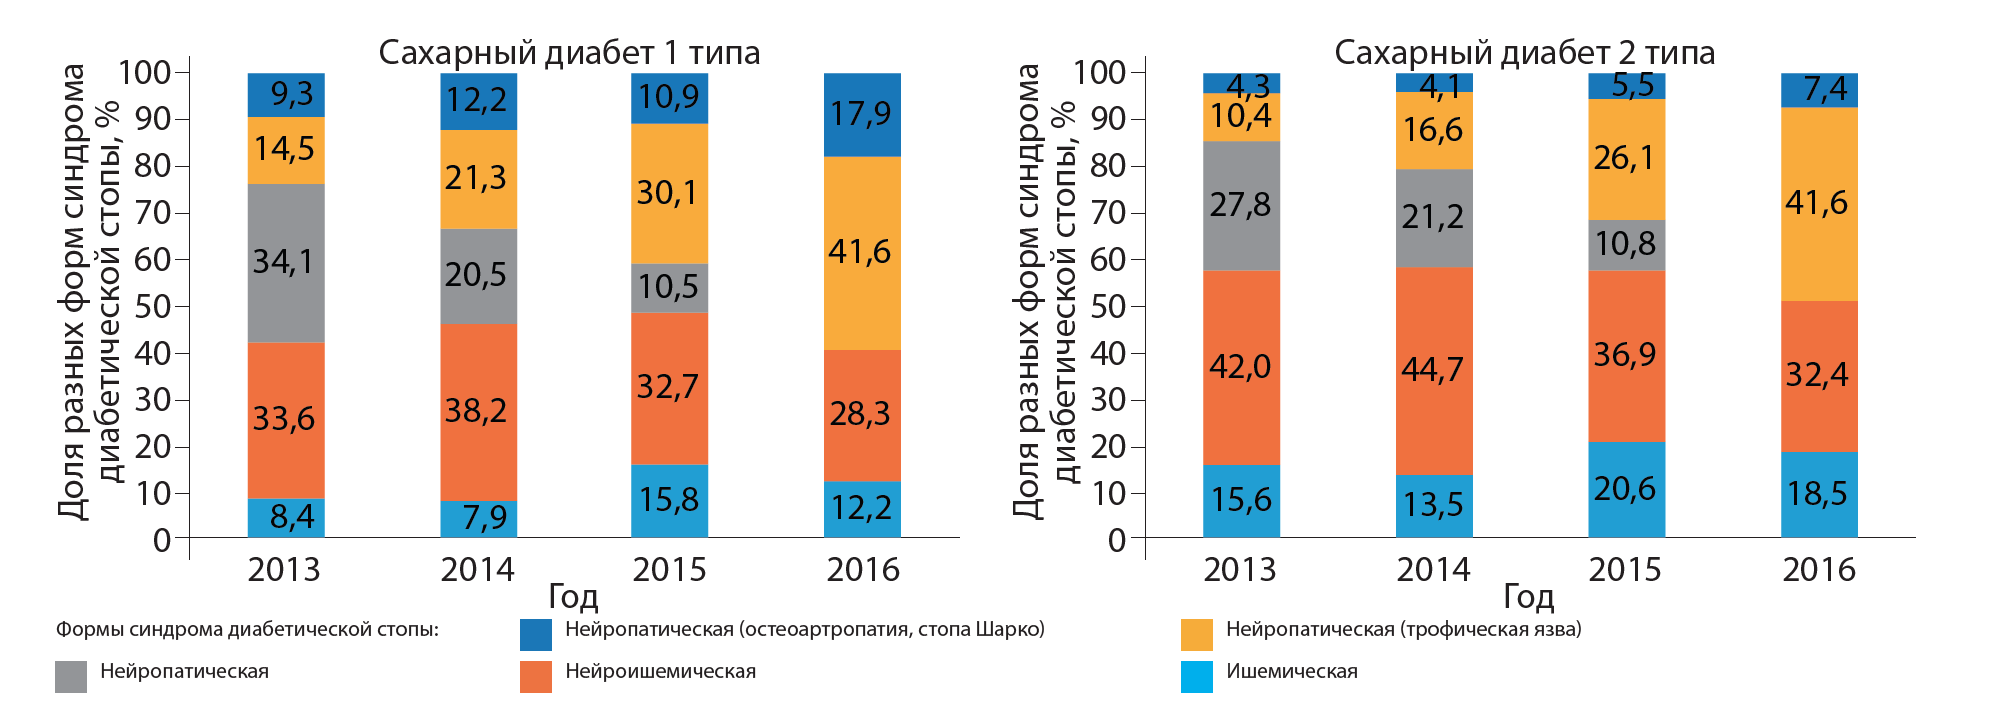 Статистика диабета в россии